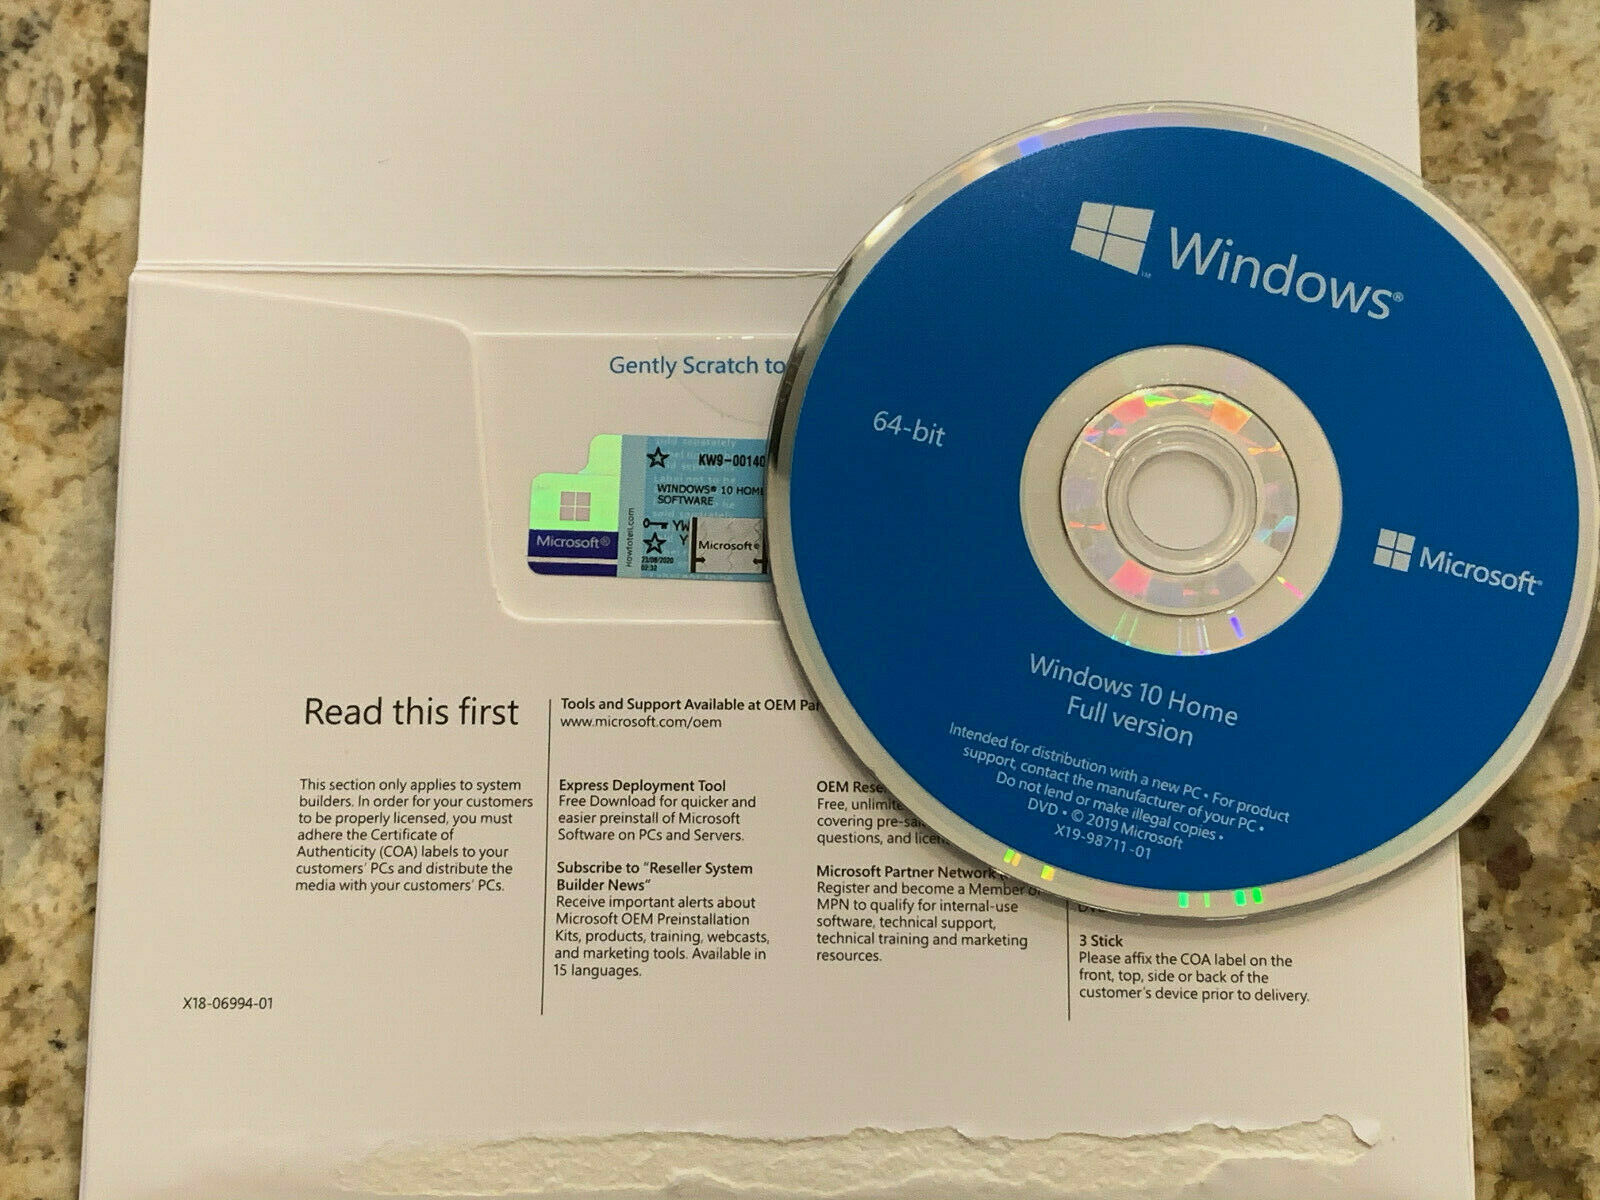 Windows 10 Home X64 Bit & Genuine Product Key Sticker(coa)